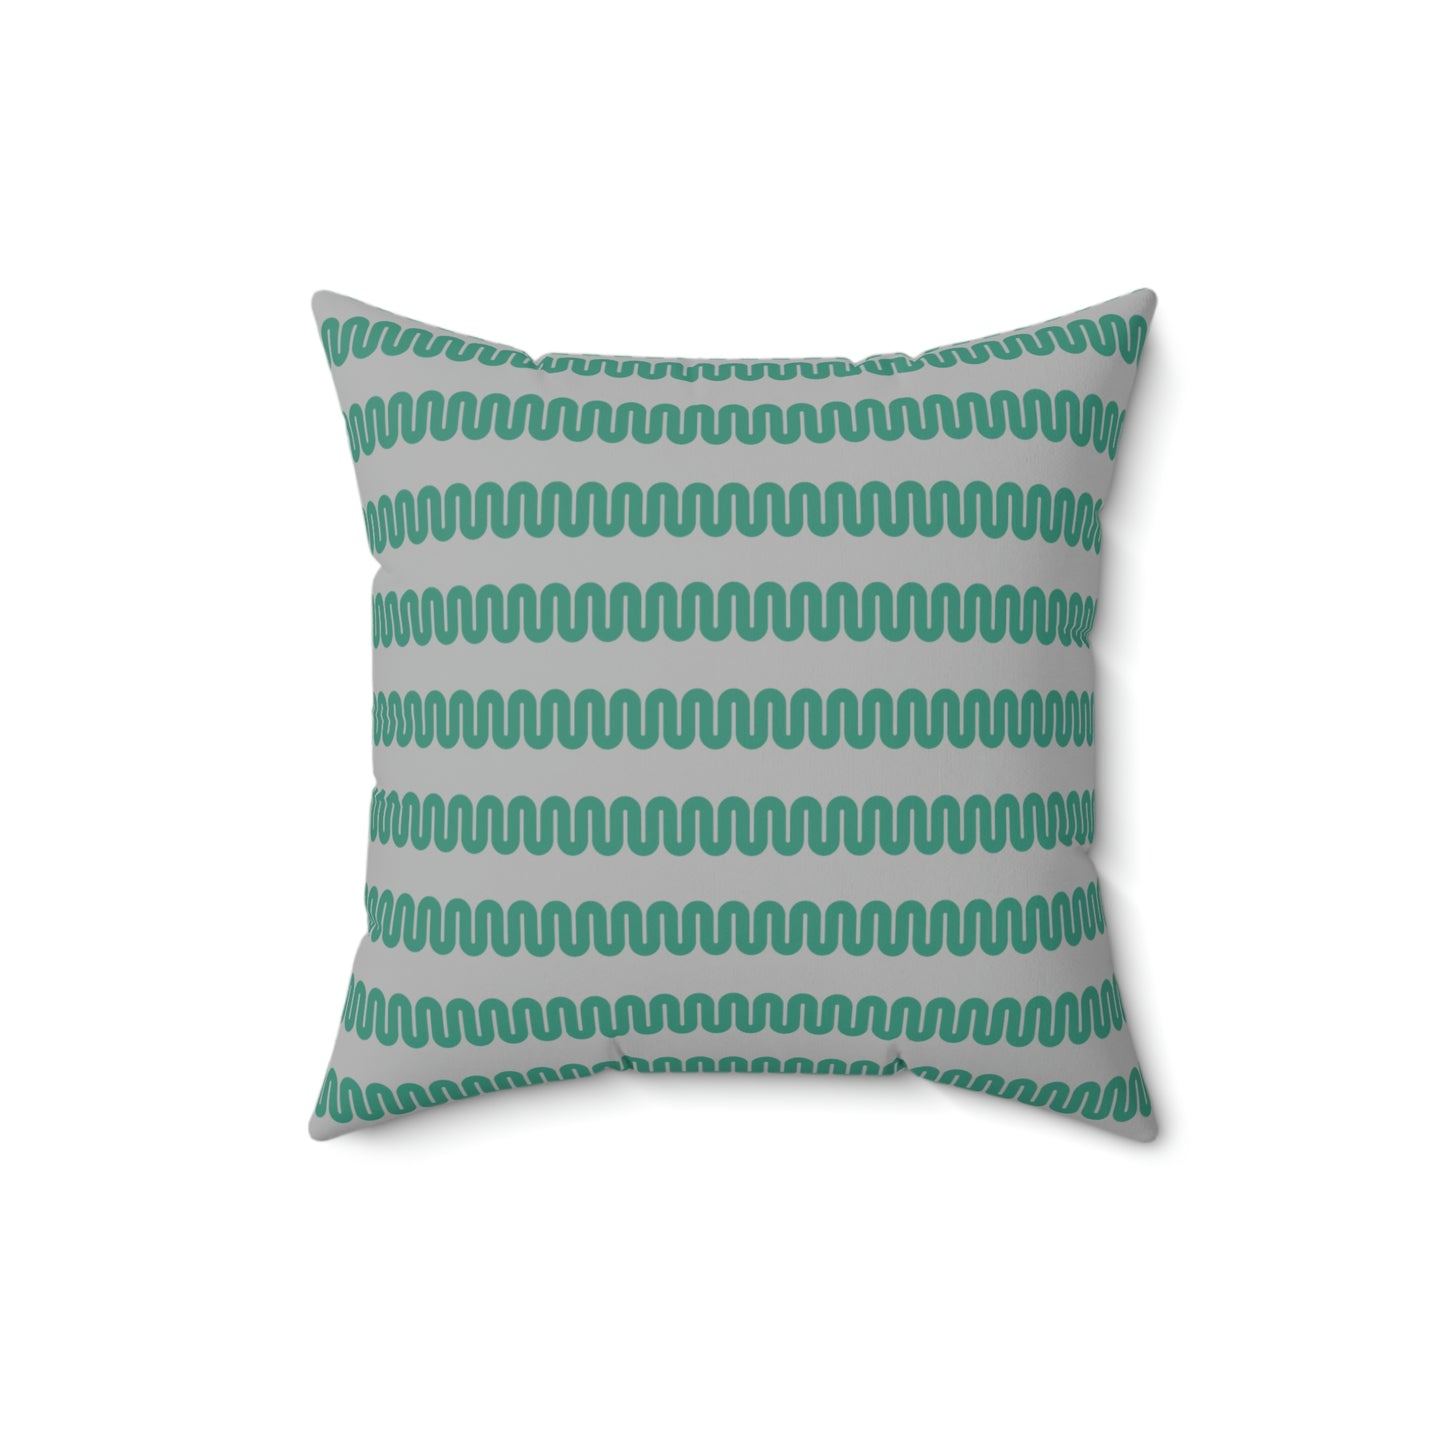 Spun Polyester Square Pillow Case “Snake Line on Light Gray”